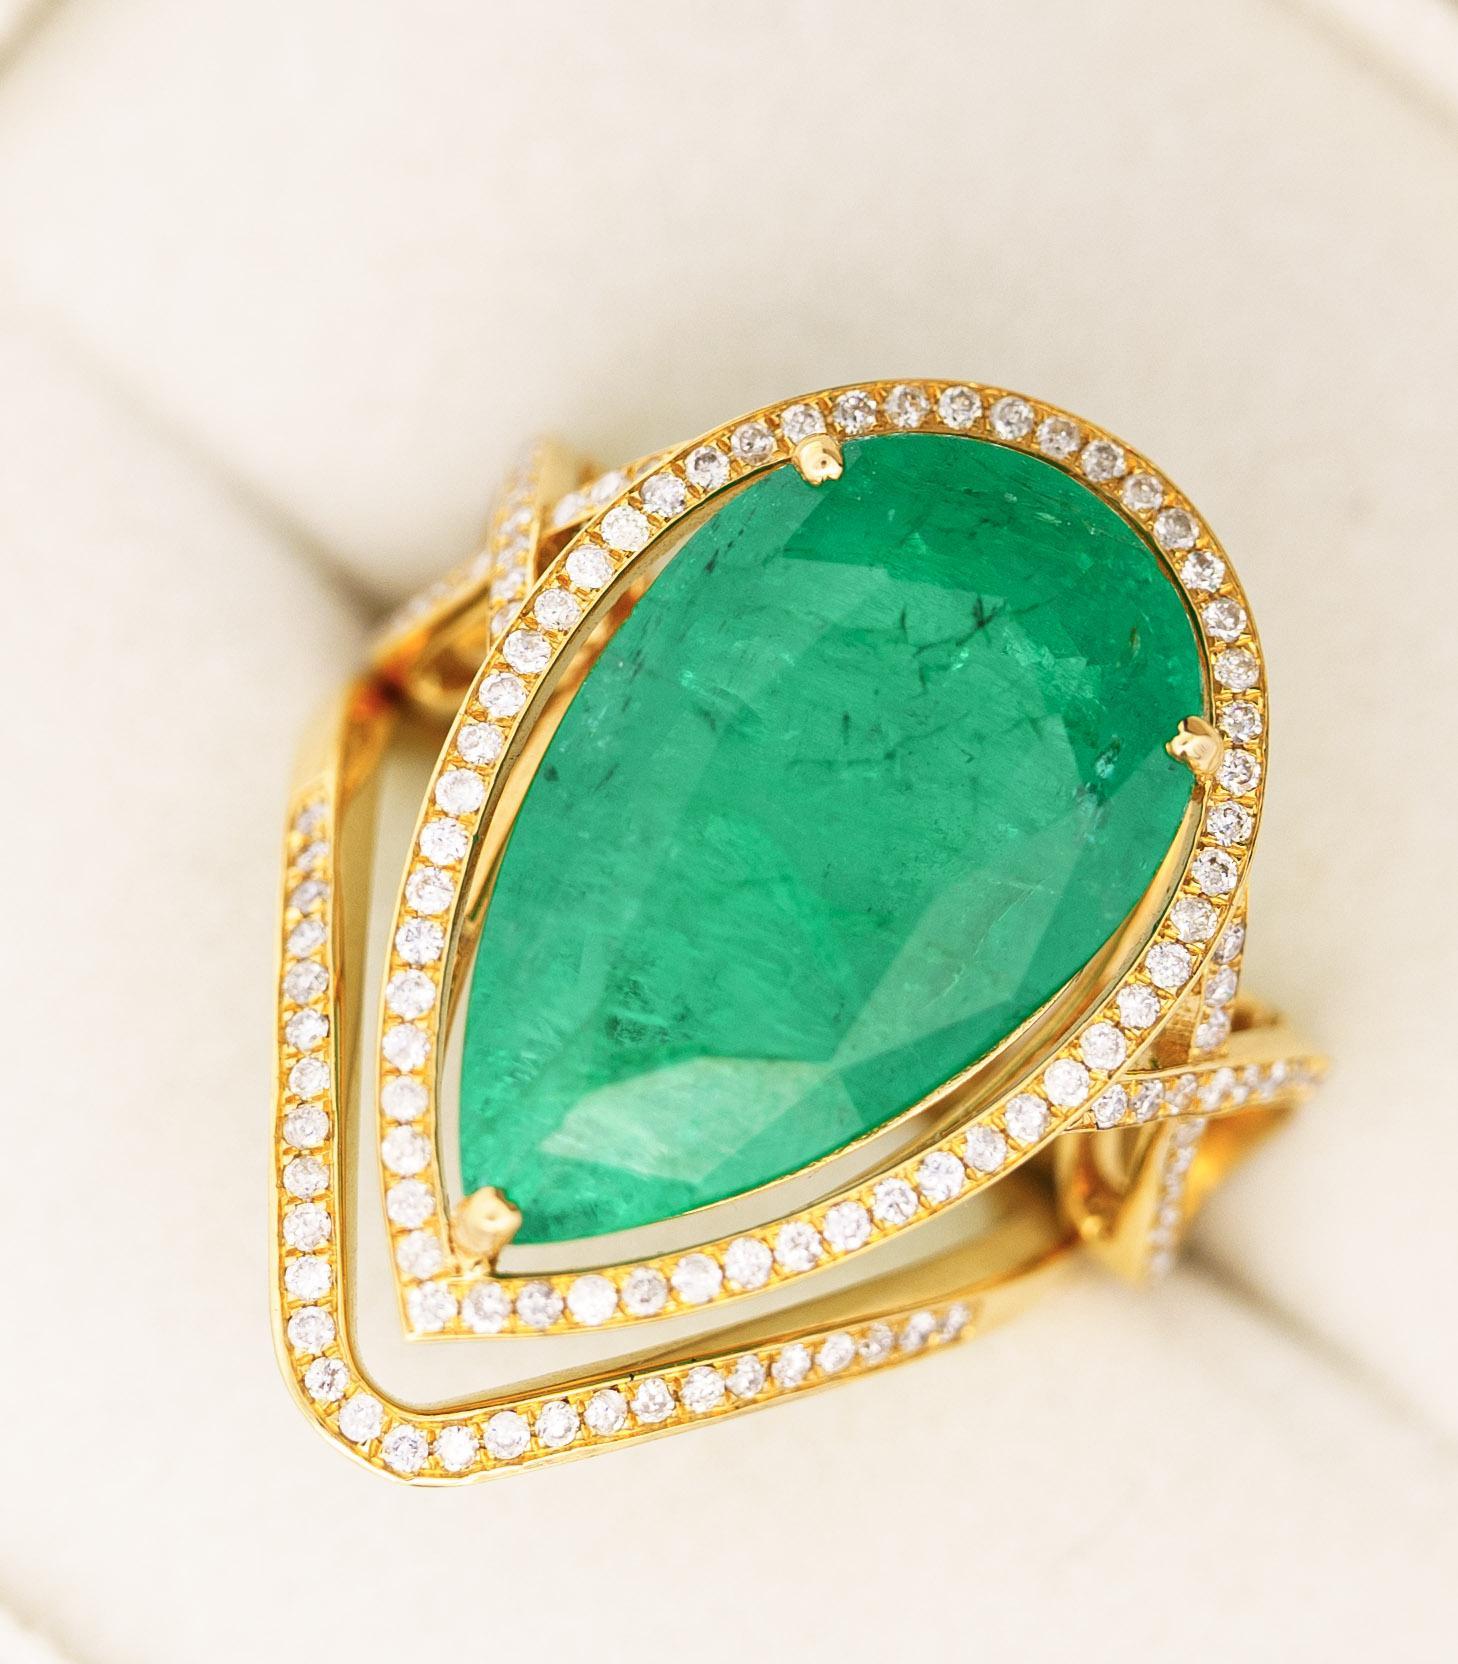 Vintage 9 Carat Pear Cut Zambian Emerald & Diamond Halo Ring Jacket in 18K Gold For Sale 6